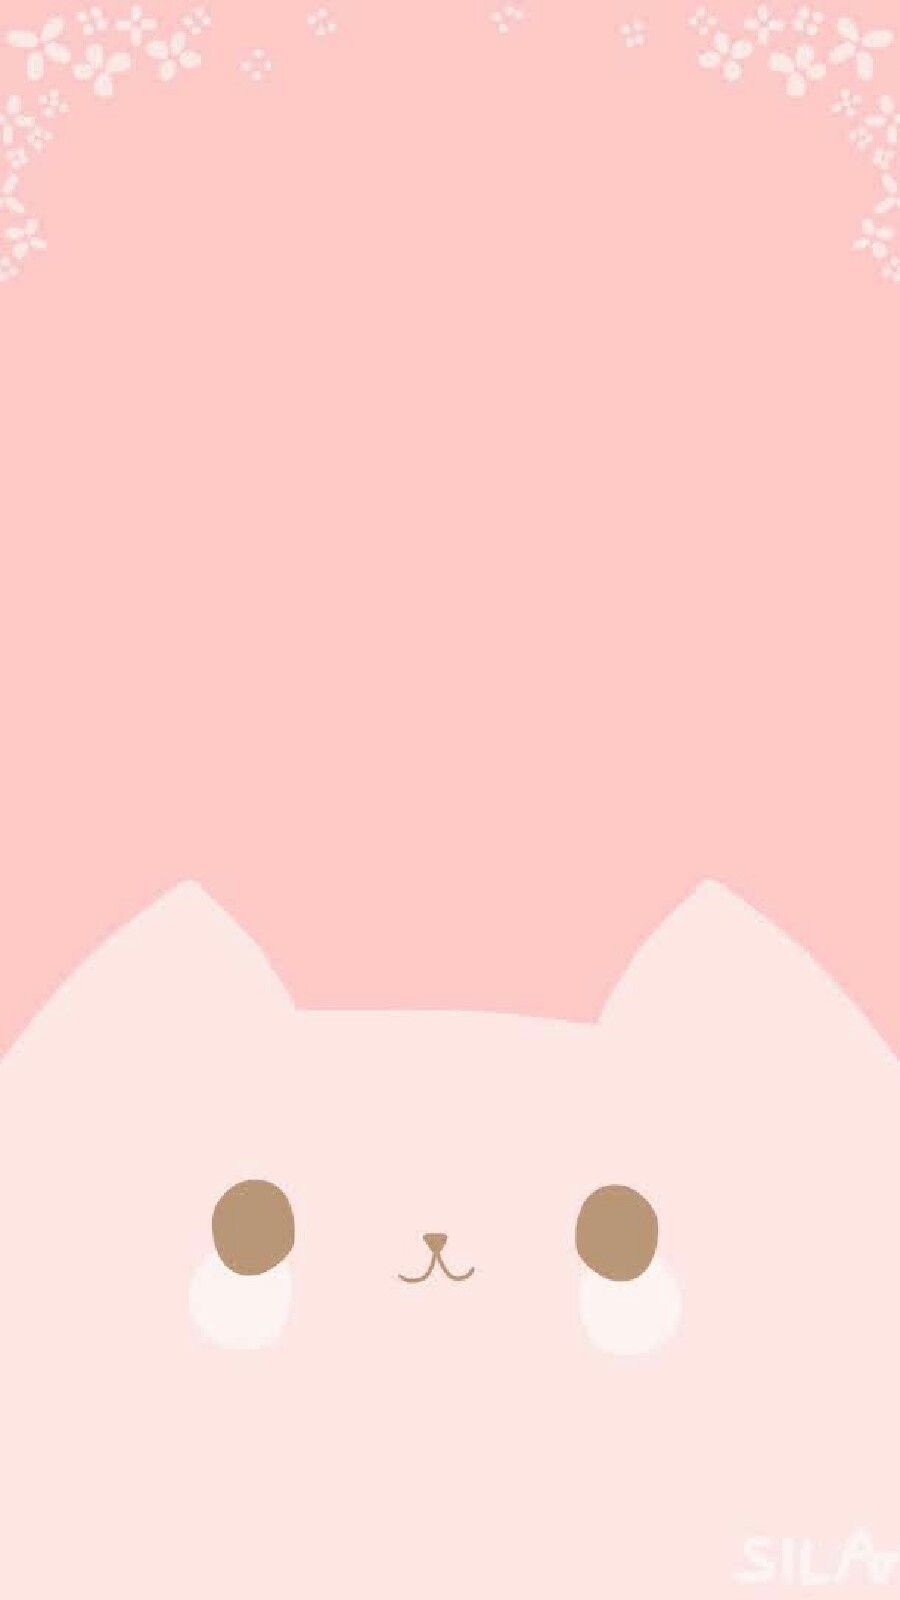 Best #Wallpaper #Mobile #Kawaii #Cute #iPhone #Android #Love #Follow #Like #Pink #Cat. Wallpaper iphone cute, iPhone wallpaper kawaii, Wallpaper phone cute